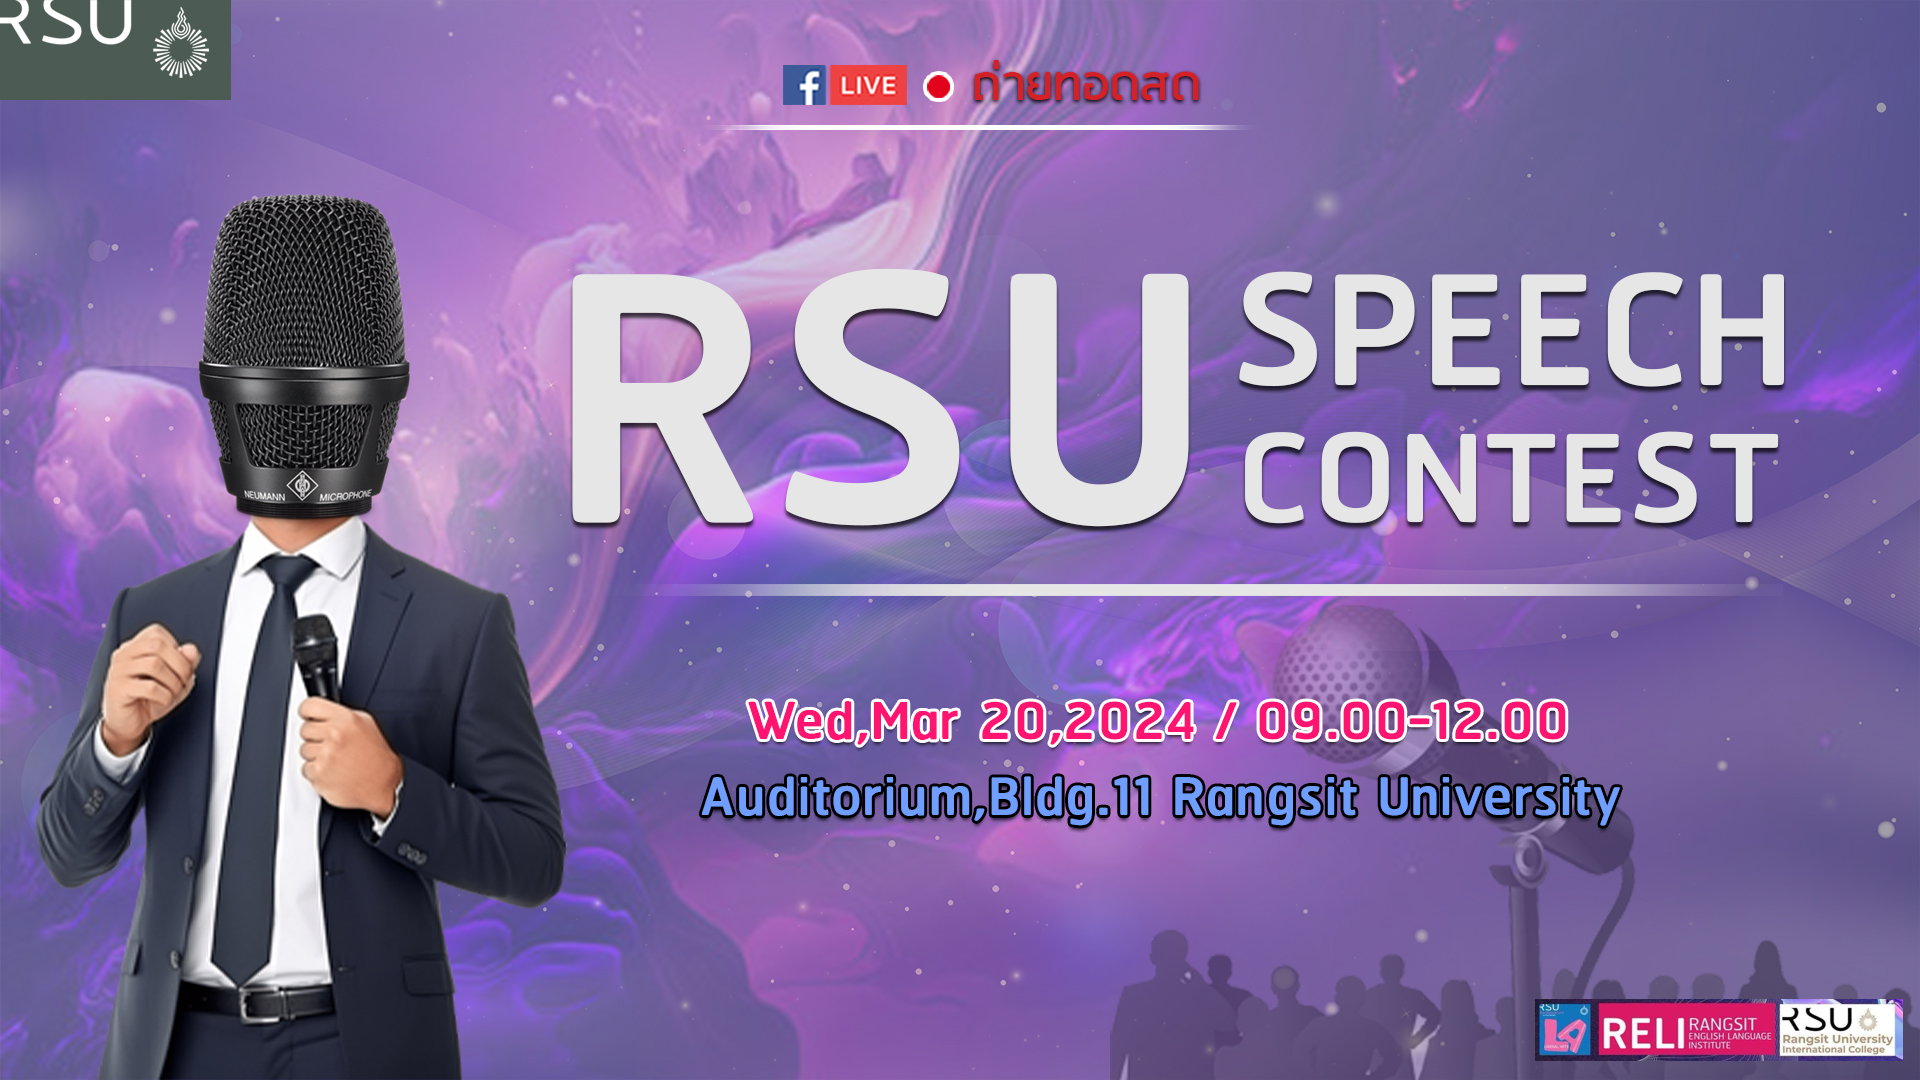 [ Live ] RSU SPEECH CONTEST 2024